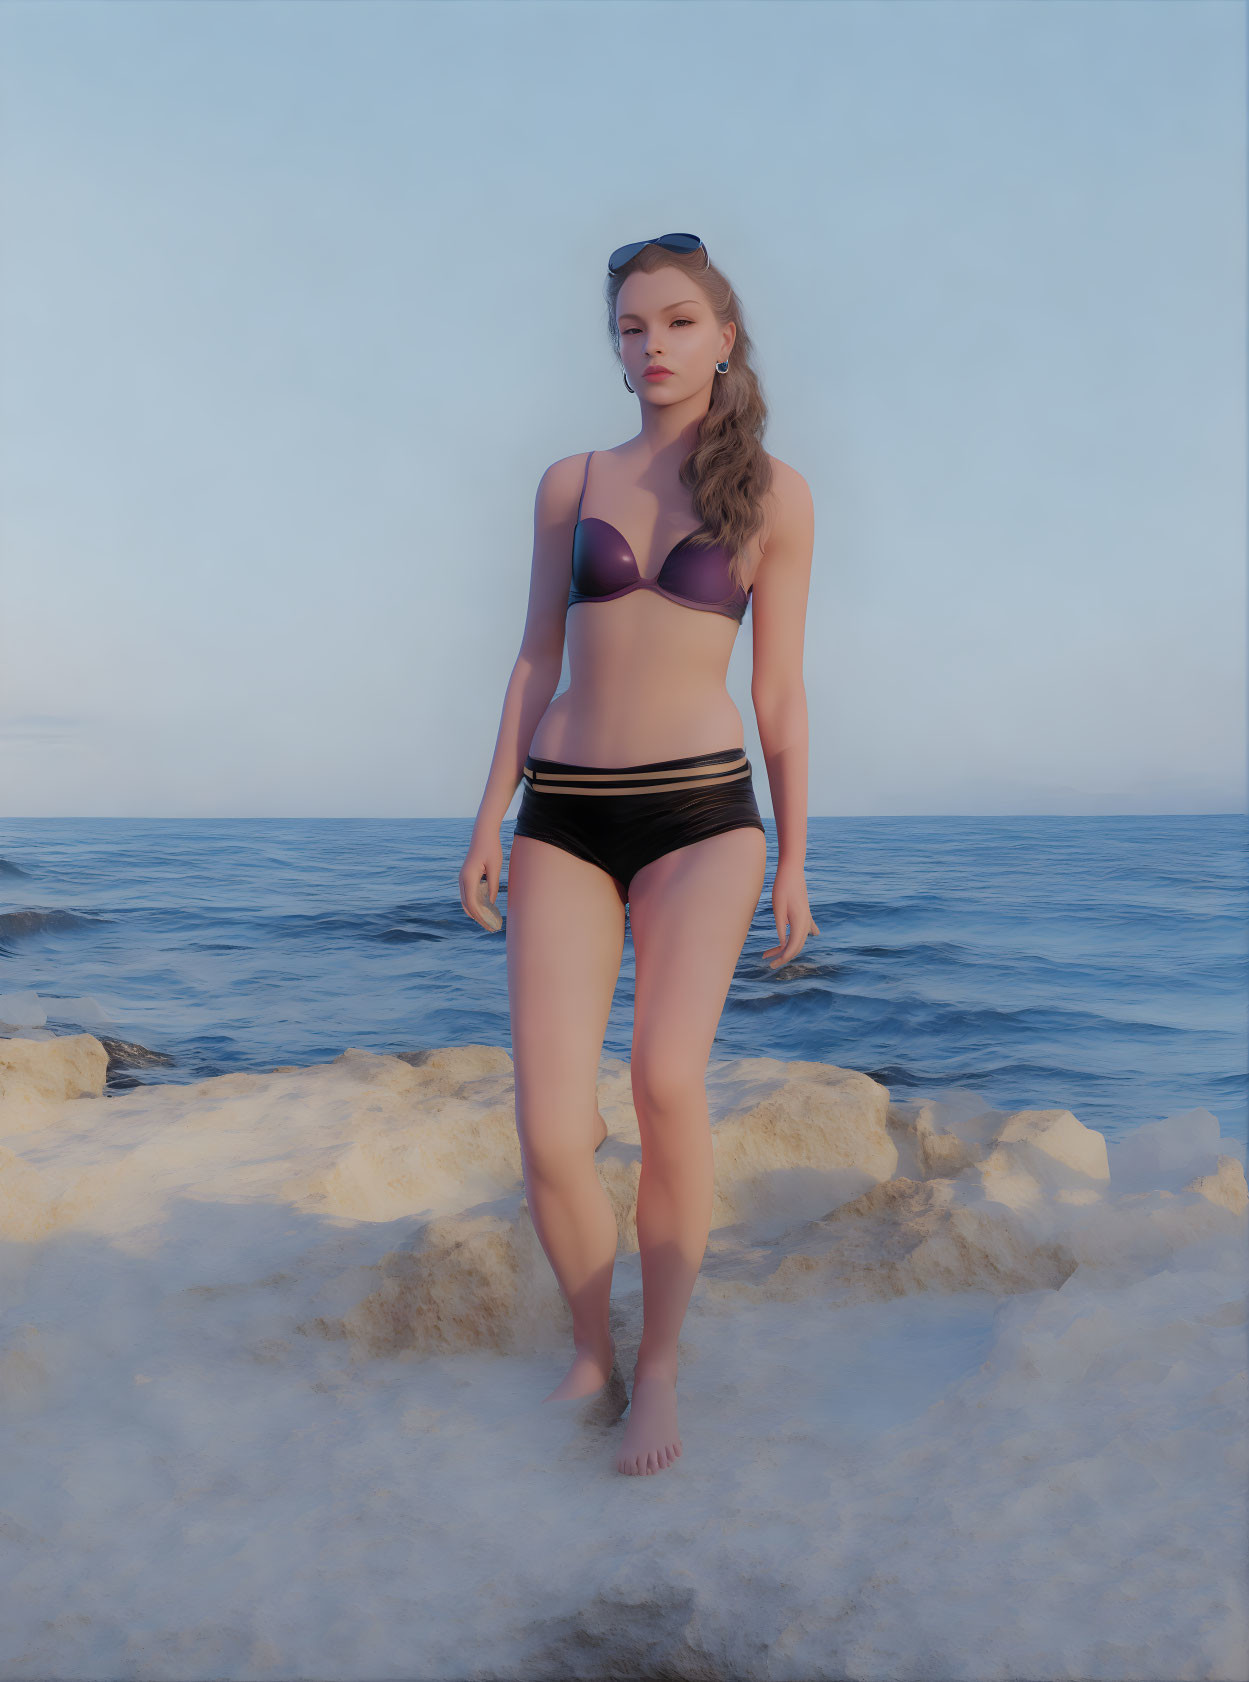 Woman in Black Bikini on Rocky Beach with Sea and Blue Sky